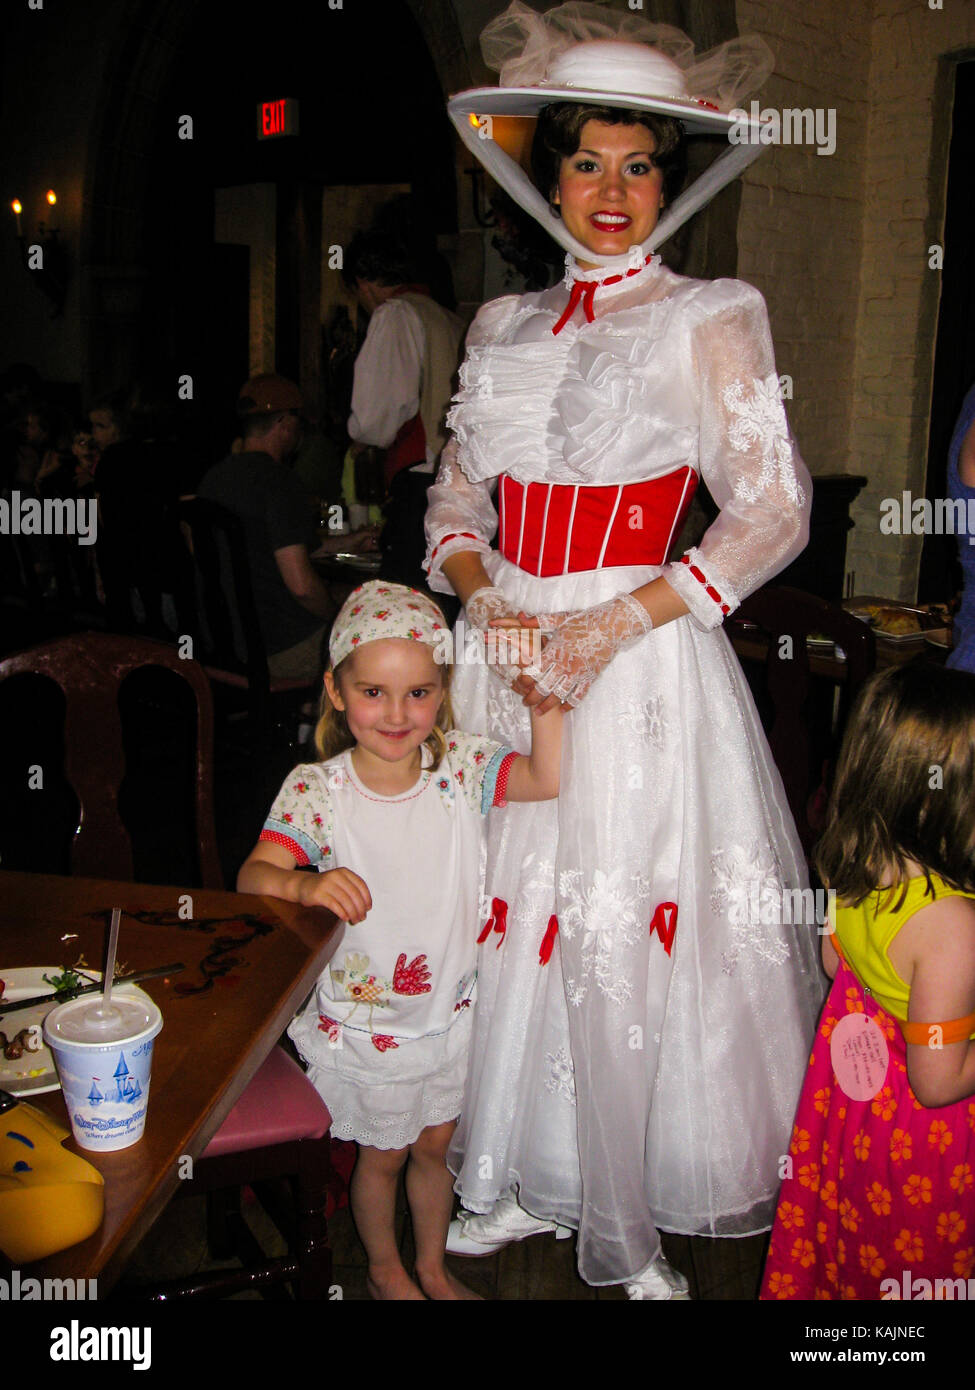 Kinder treffen Mary Poppins in Disney World, Florida, USA Stockfotografie -  Alamy